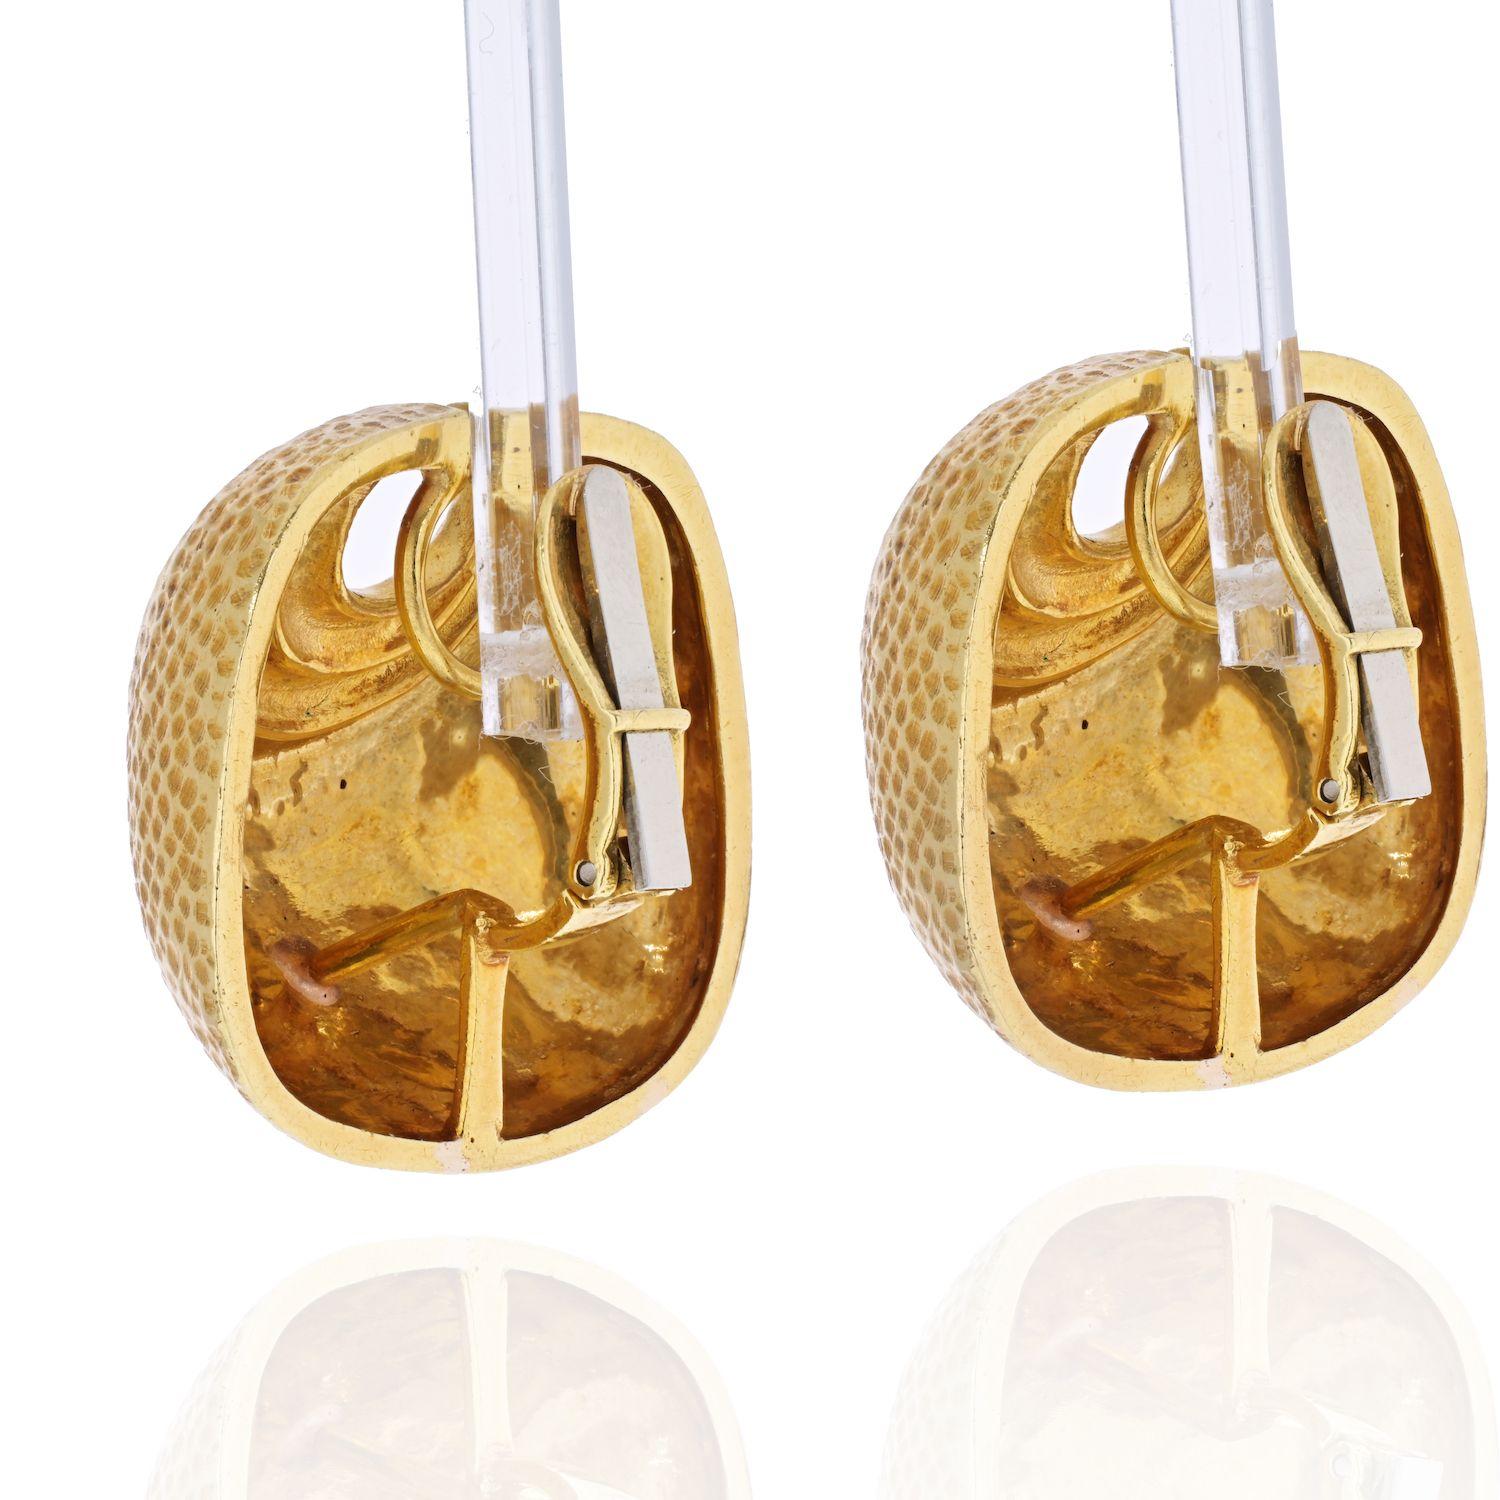 gold croissant earrings